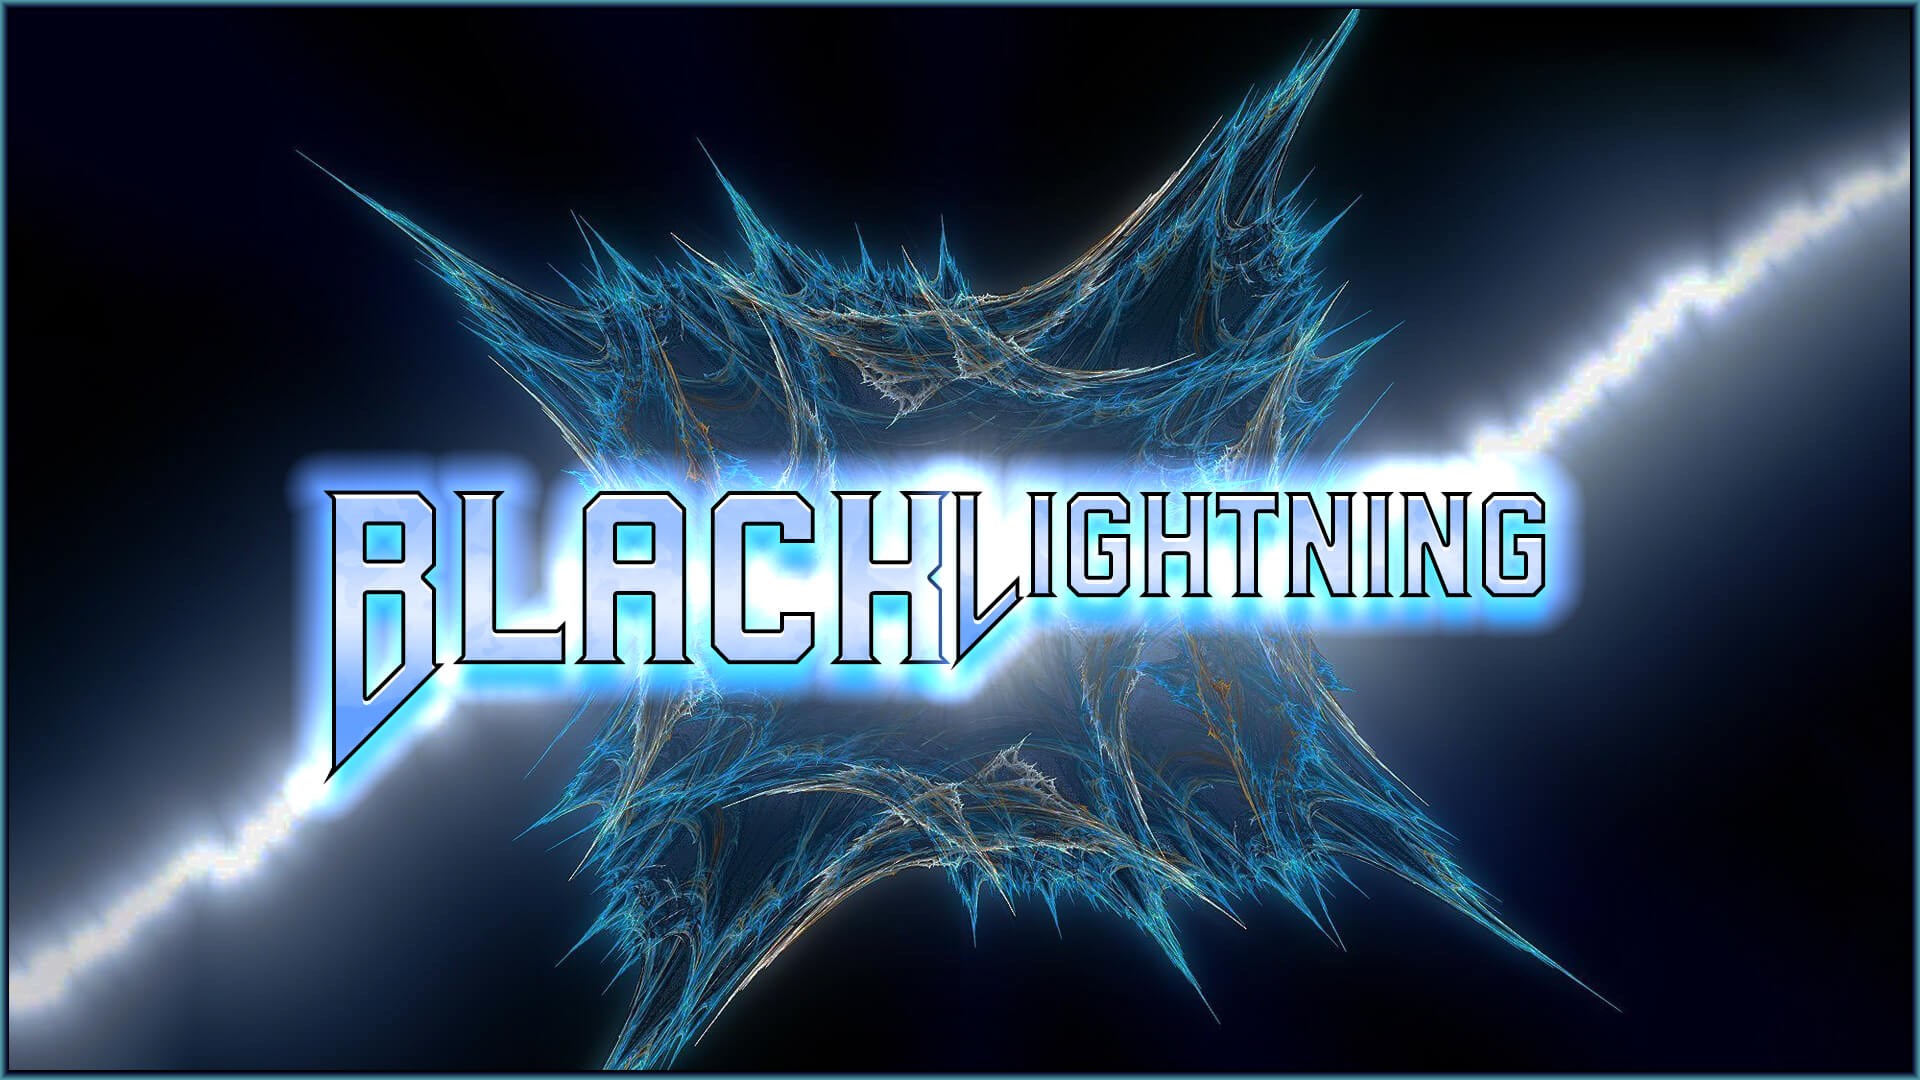 How to install Black Lightning for Kodi 17 Krypton or 18 Leia